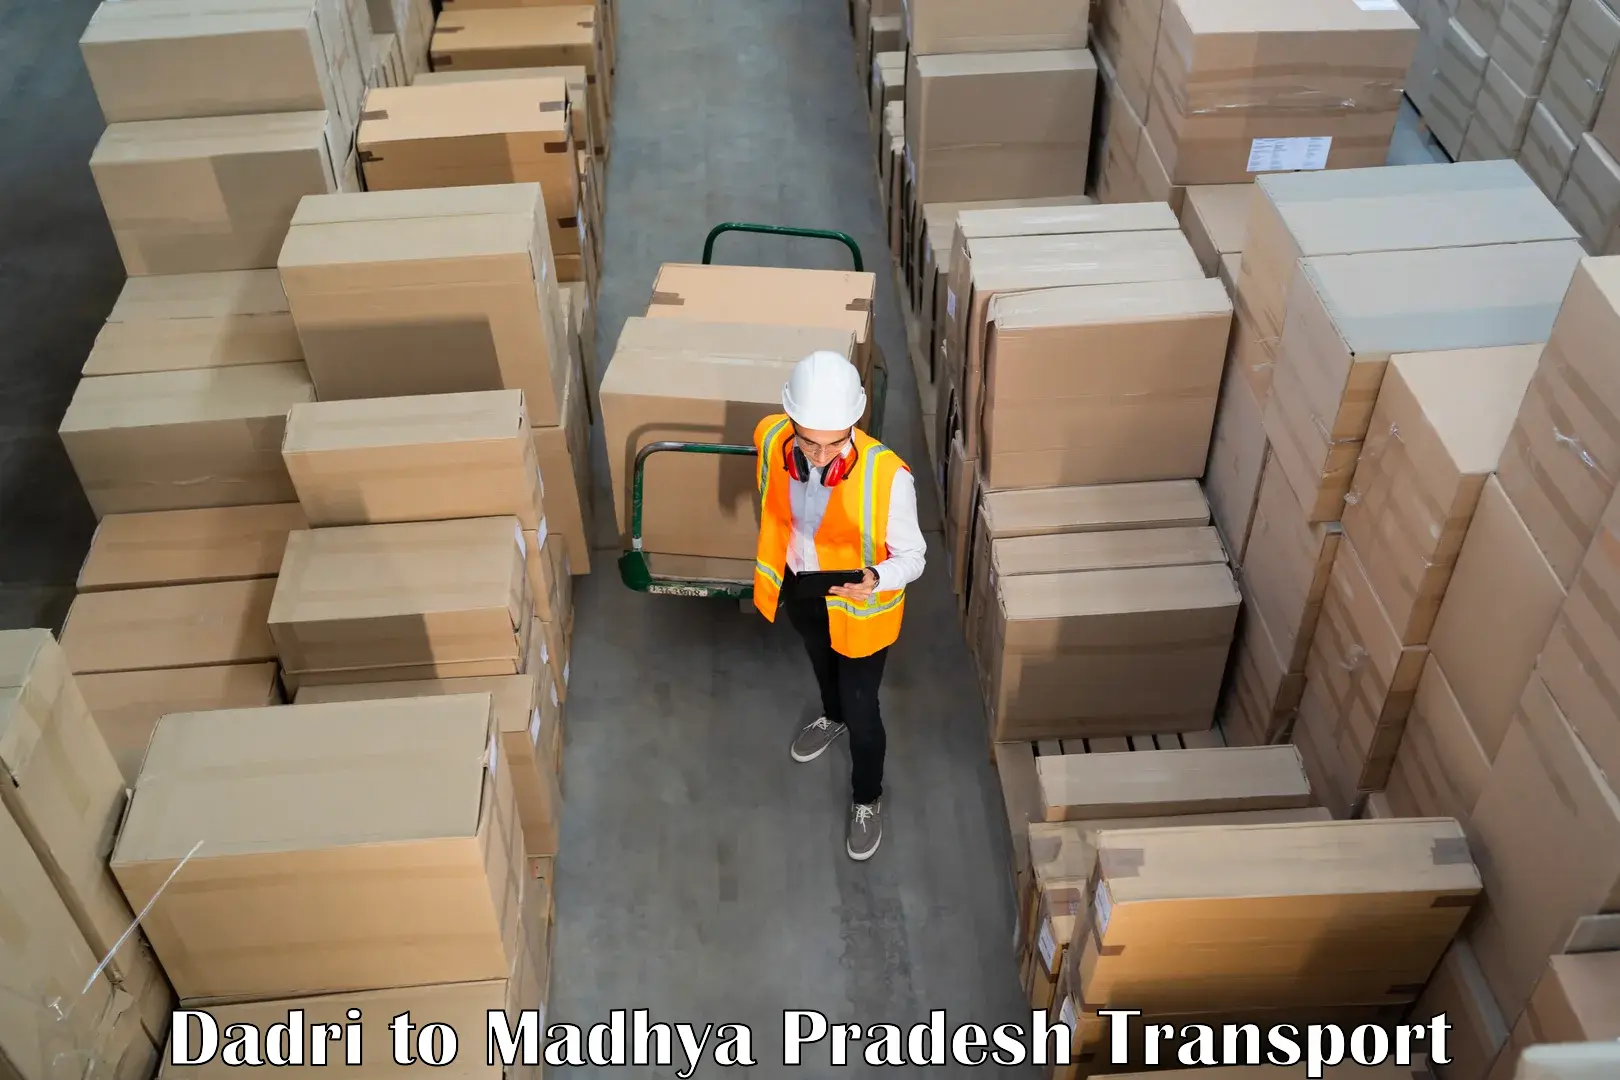 Shipping partner Dadri to Chand Chaurai